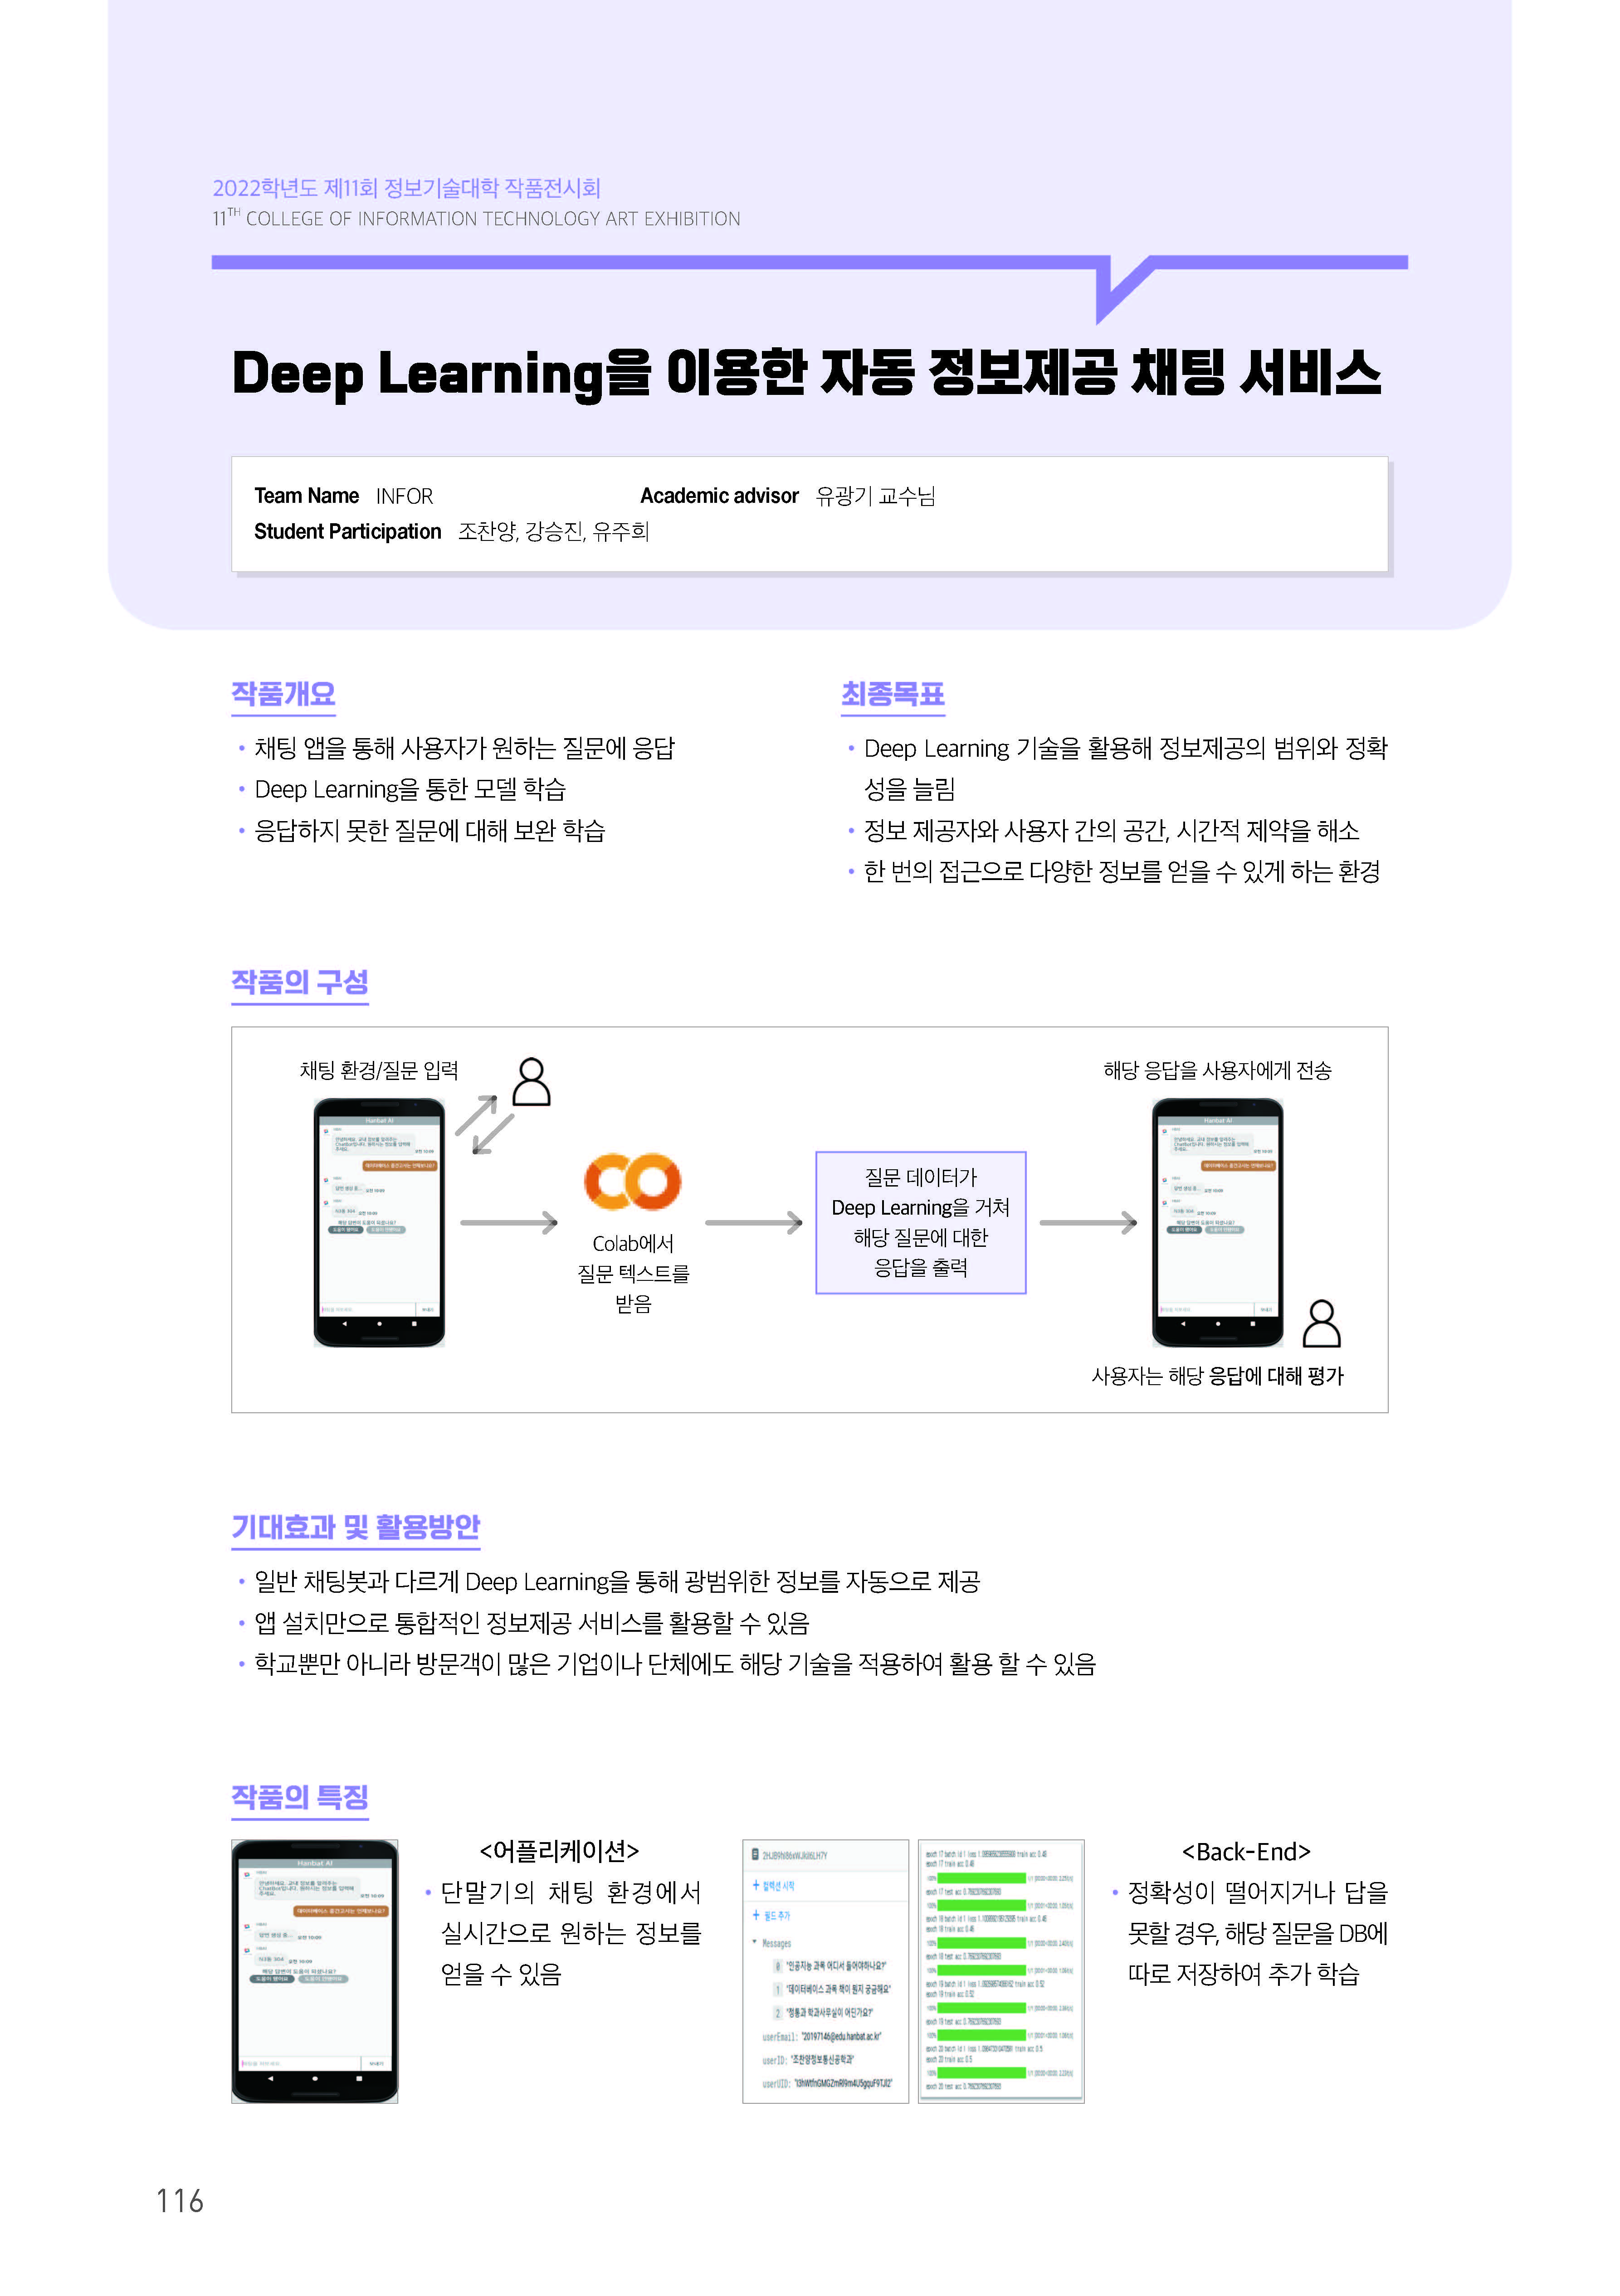 [2022-116] Deep Learning을 이용한 자동 정보제공 채팅 서비스 이미지